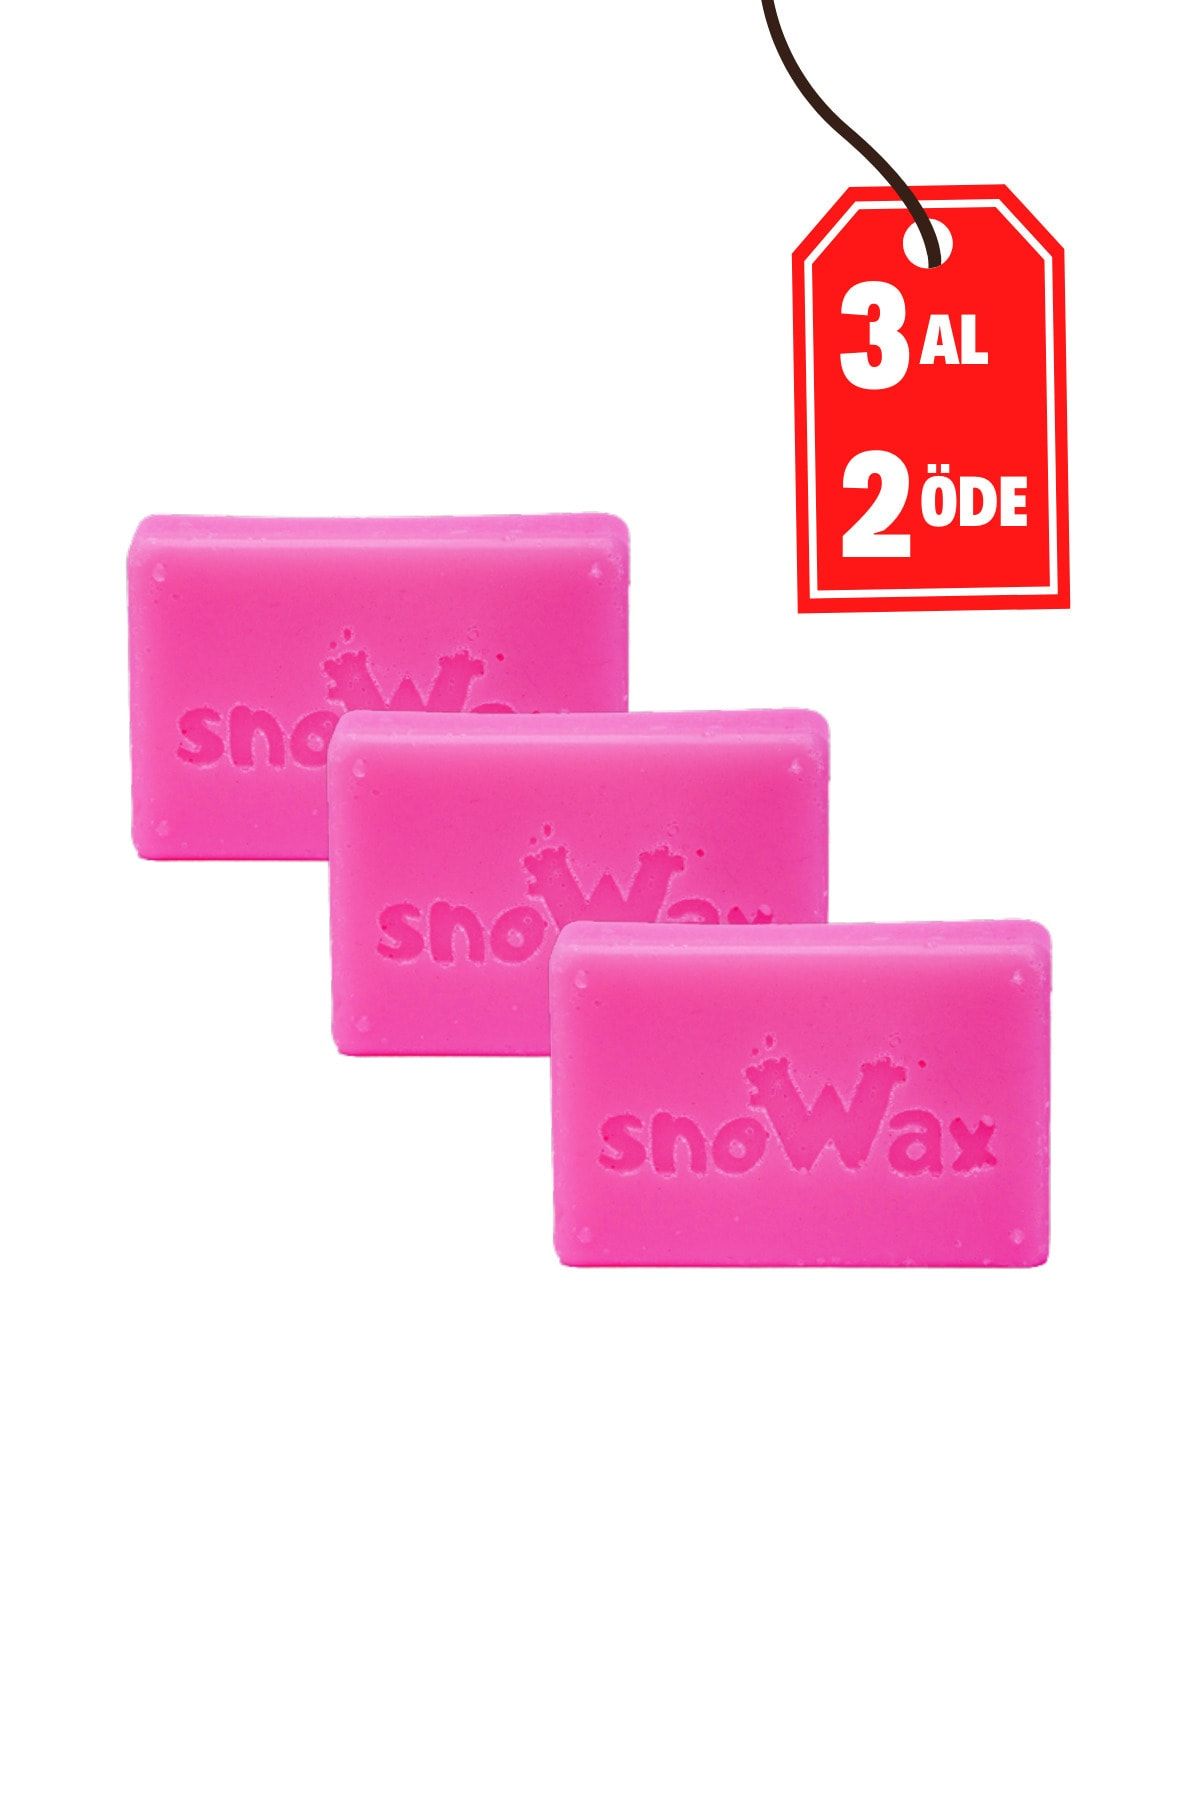 SNOWAX Rub-on Wax Soguk Uygulama Wax Skiwax Üçlü Set Kayak Snowbboard Için Wax